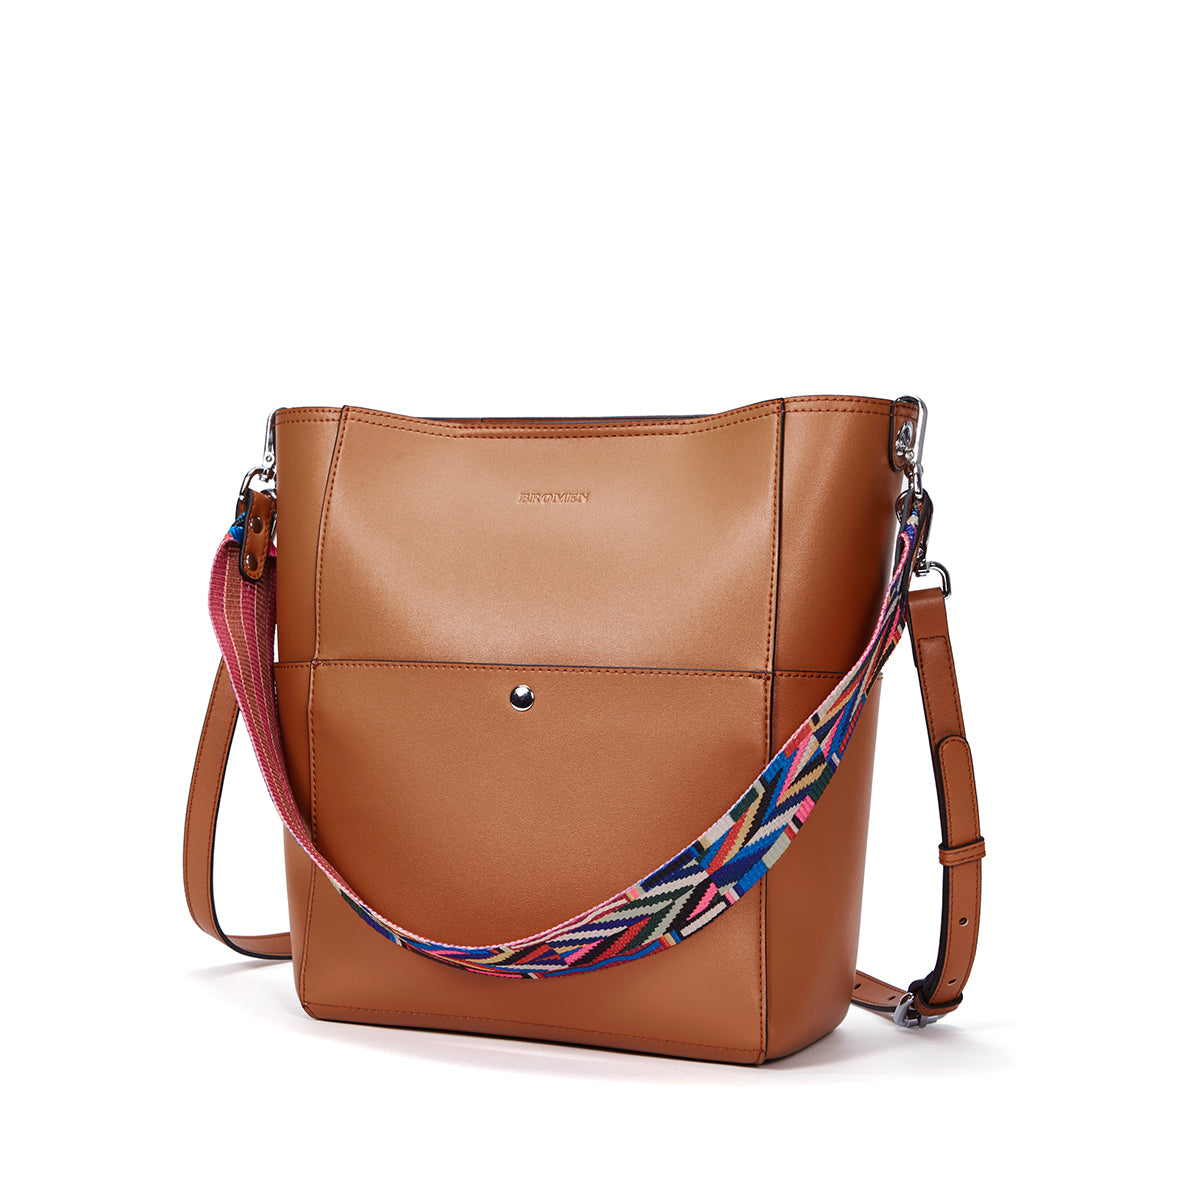 Designer Brightly Colored LEATHER Handbag Purse Cross Design RB5800